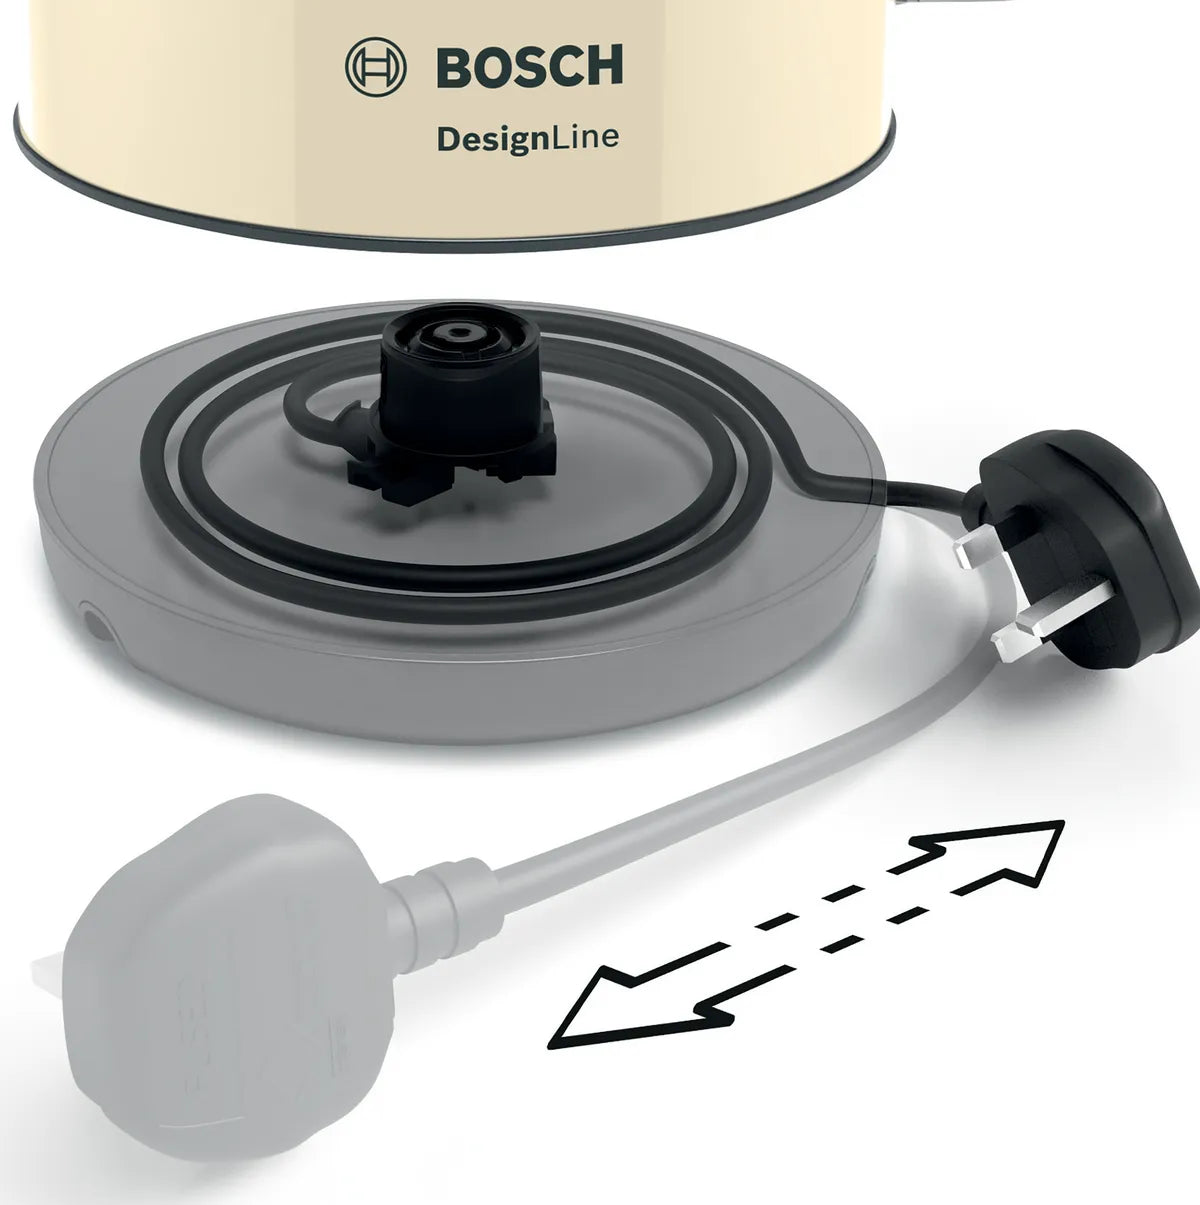 Bosch Design Line 1.7L Kettle Cream | TWK4P437GB